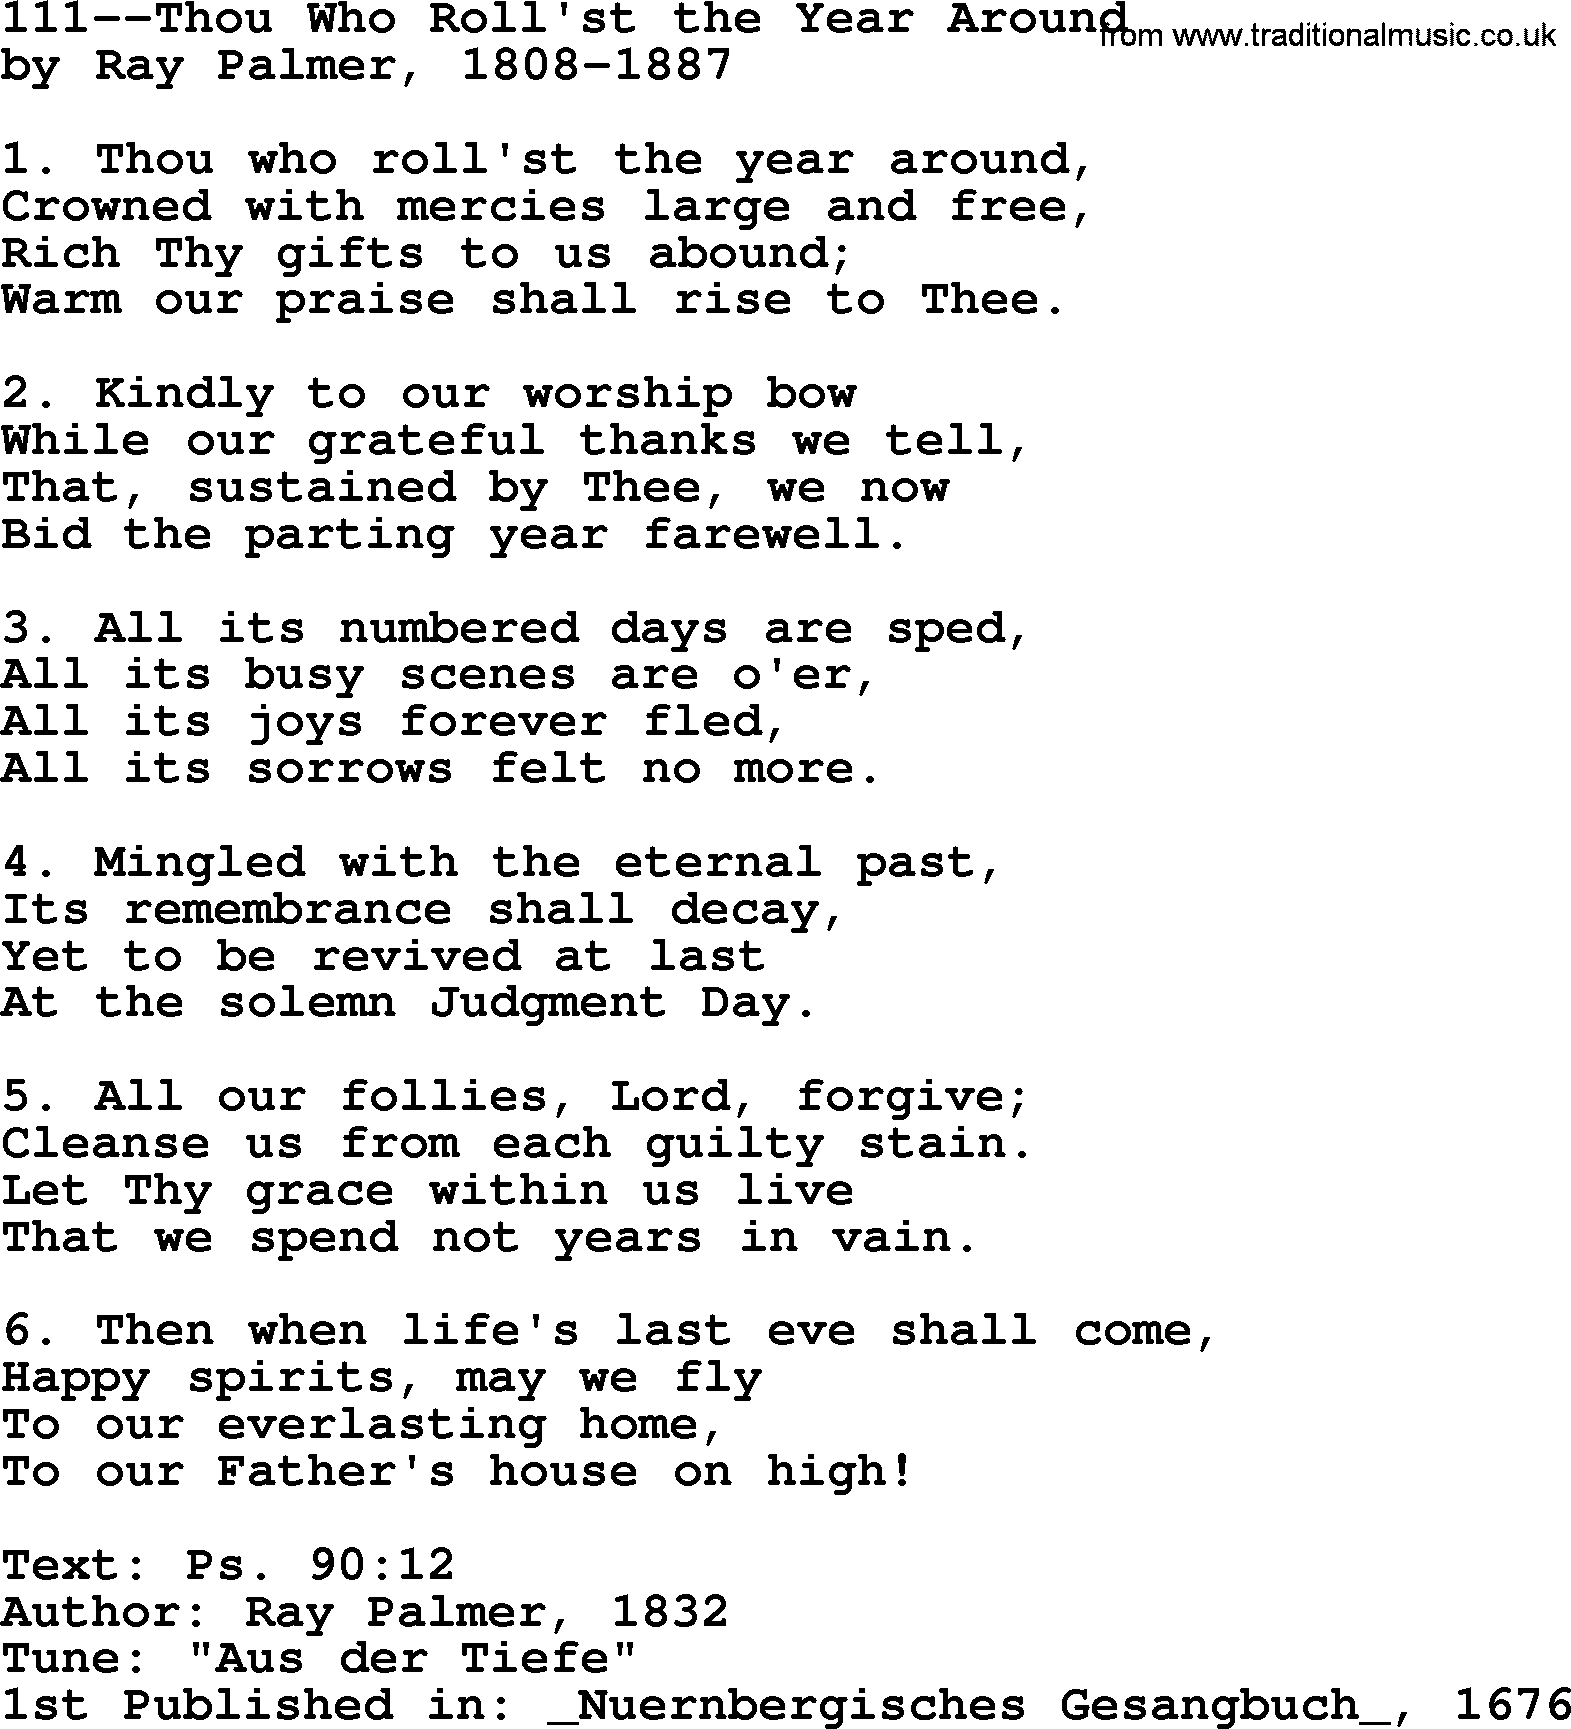 Lutheran Hymn: 111--Thou Who Roll'st the Year Around.txt lyrics with PDF